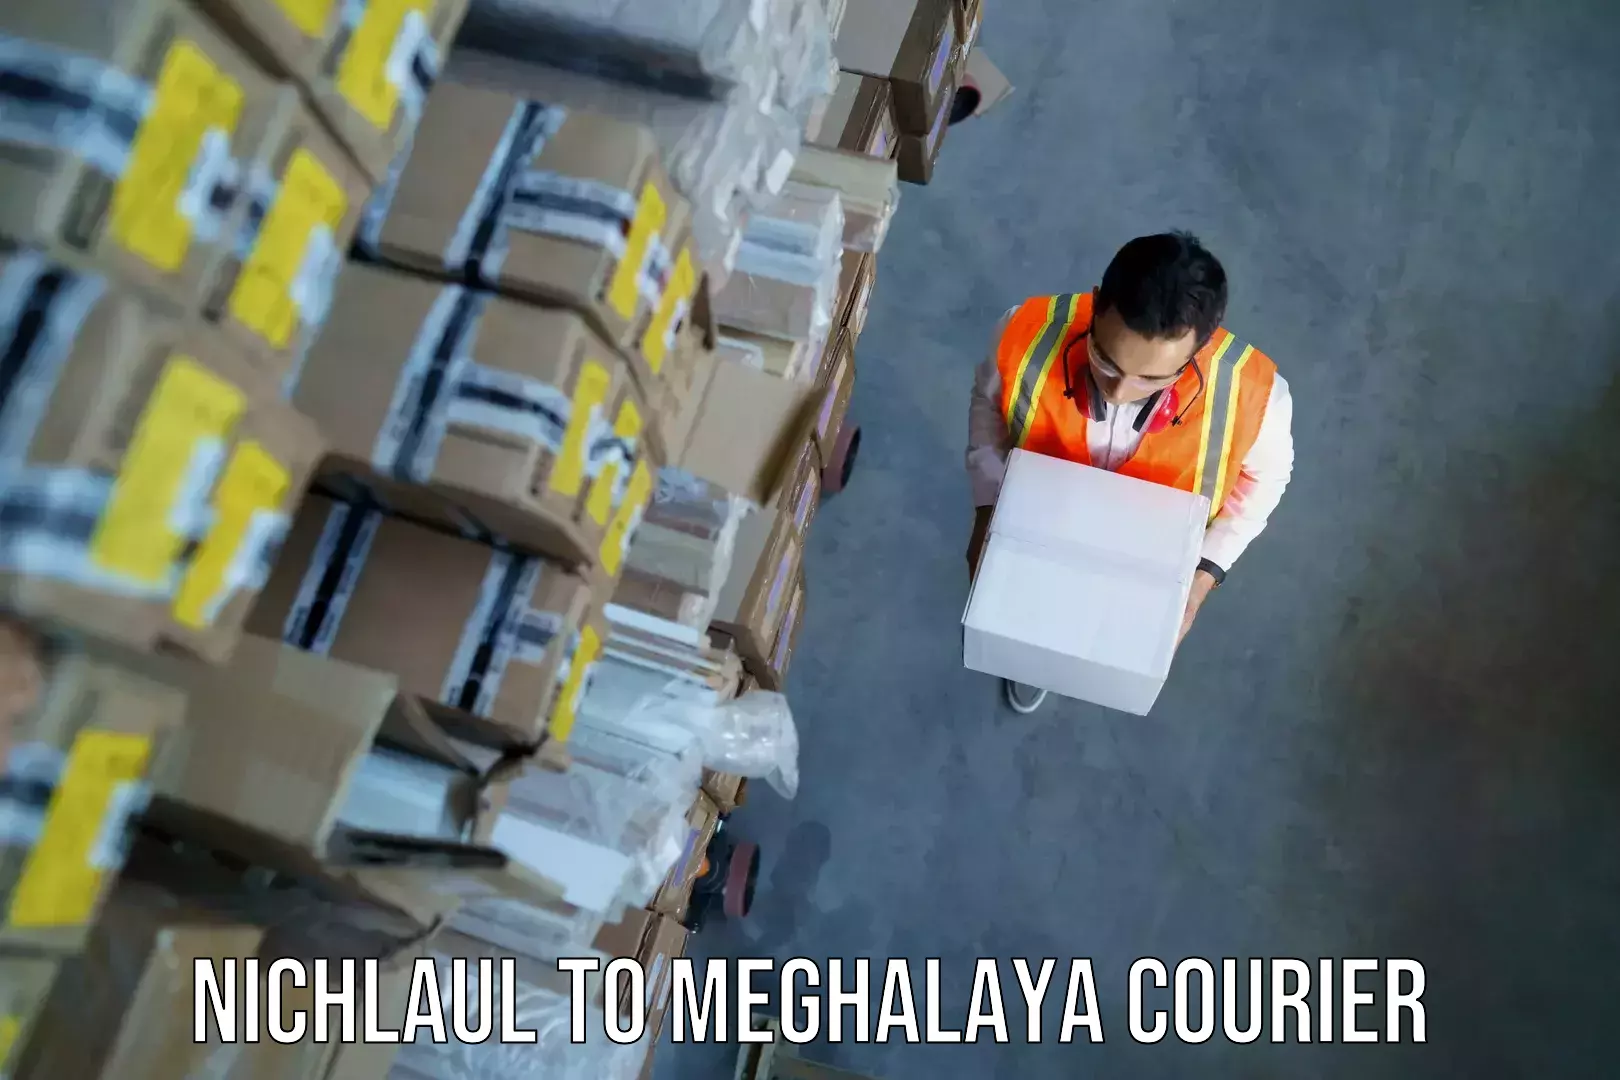 Door-to-door baggage service Nichlaul to Meghalaya